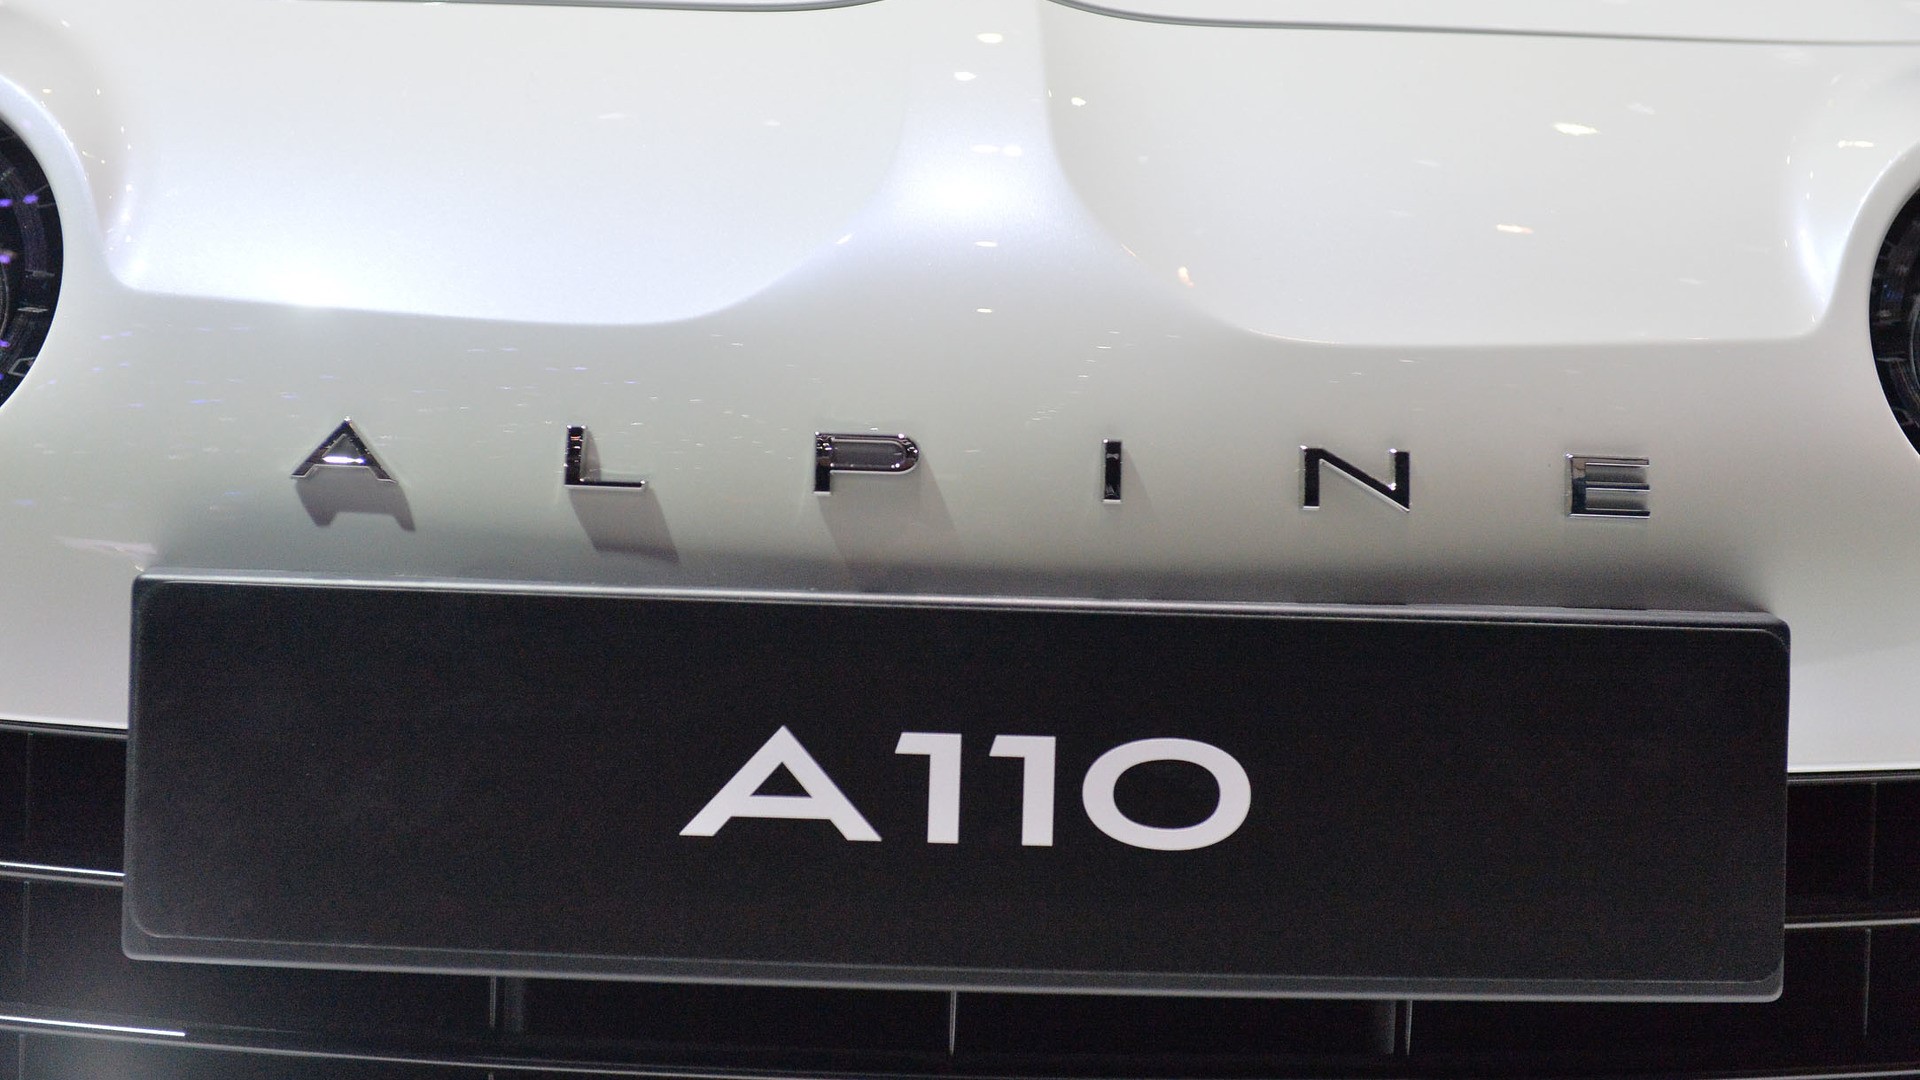 Alpine a110 (9)